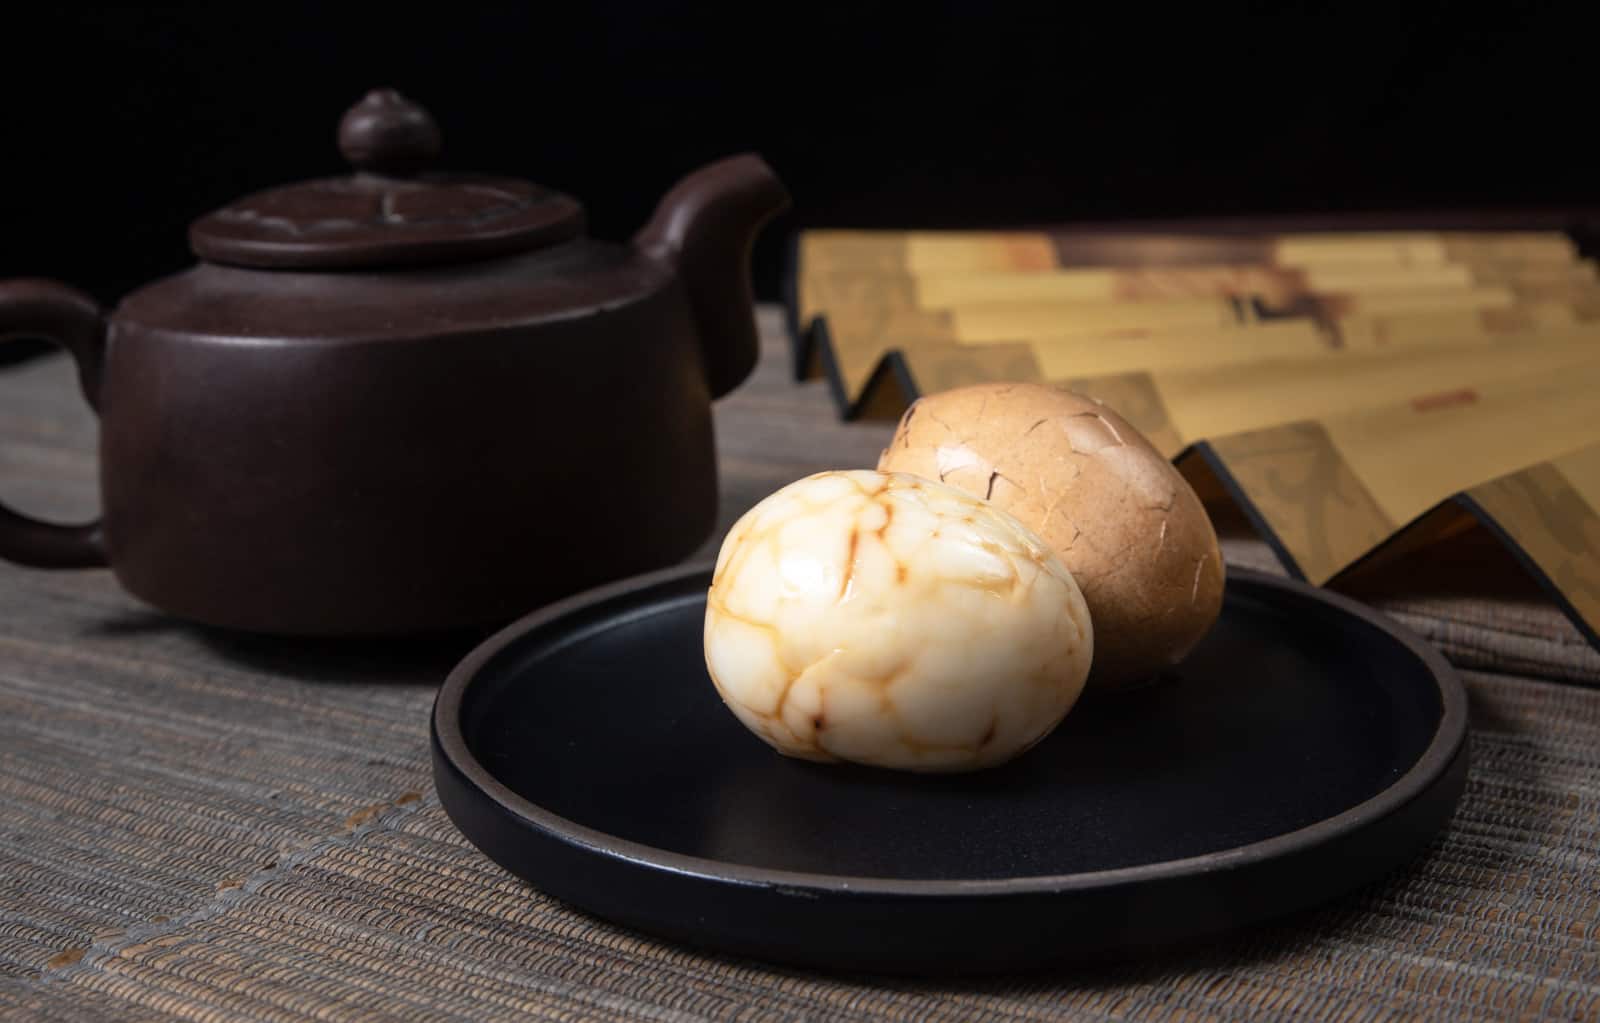 https://www.pressurecookrecipes.com/wp-content/uploads/2019/05/instant-pot-chinese-tea-eggs.jpg